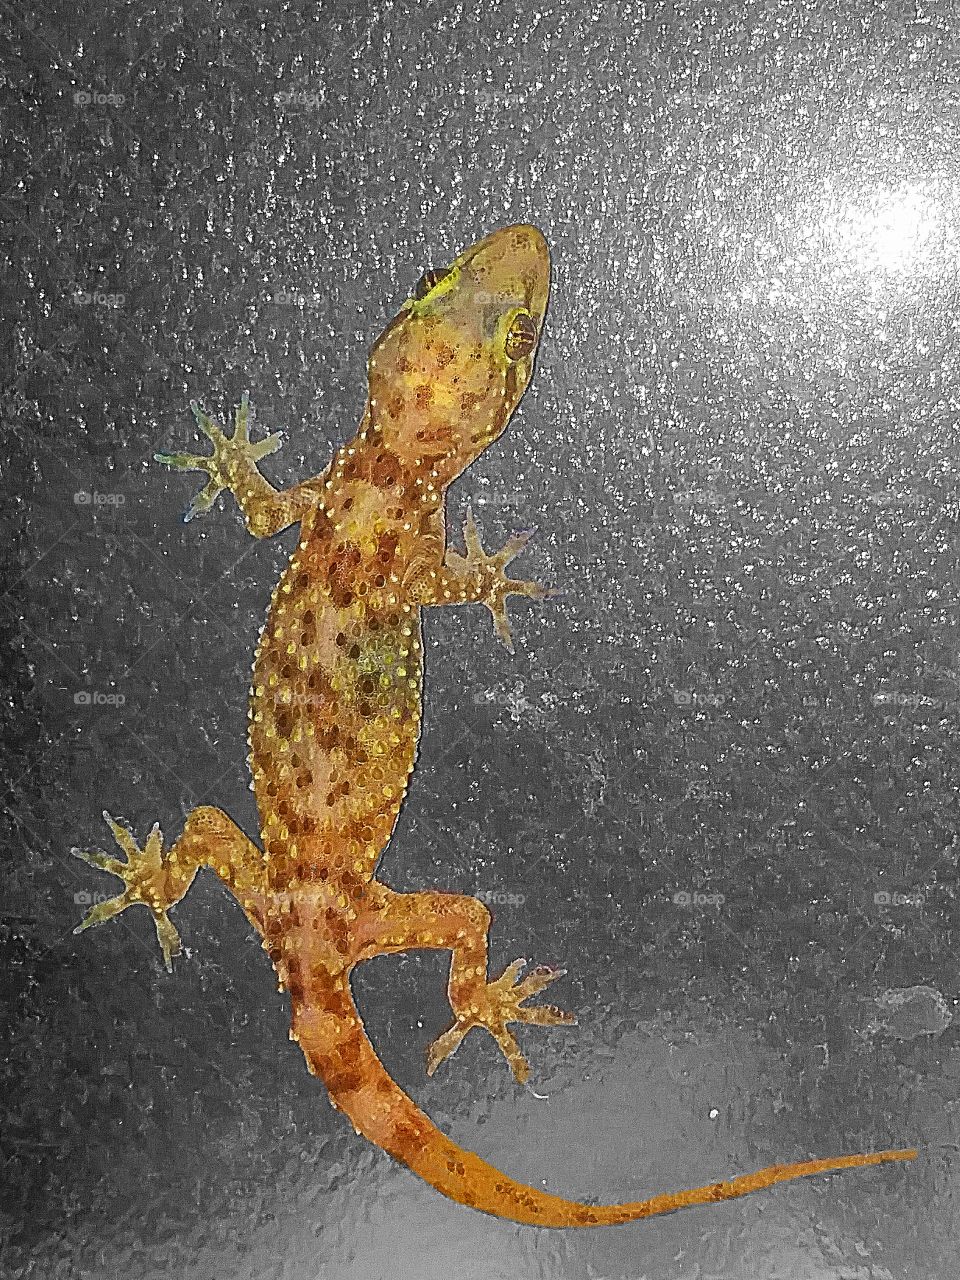 gecko on glass